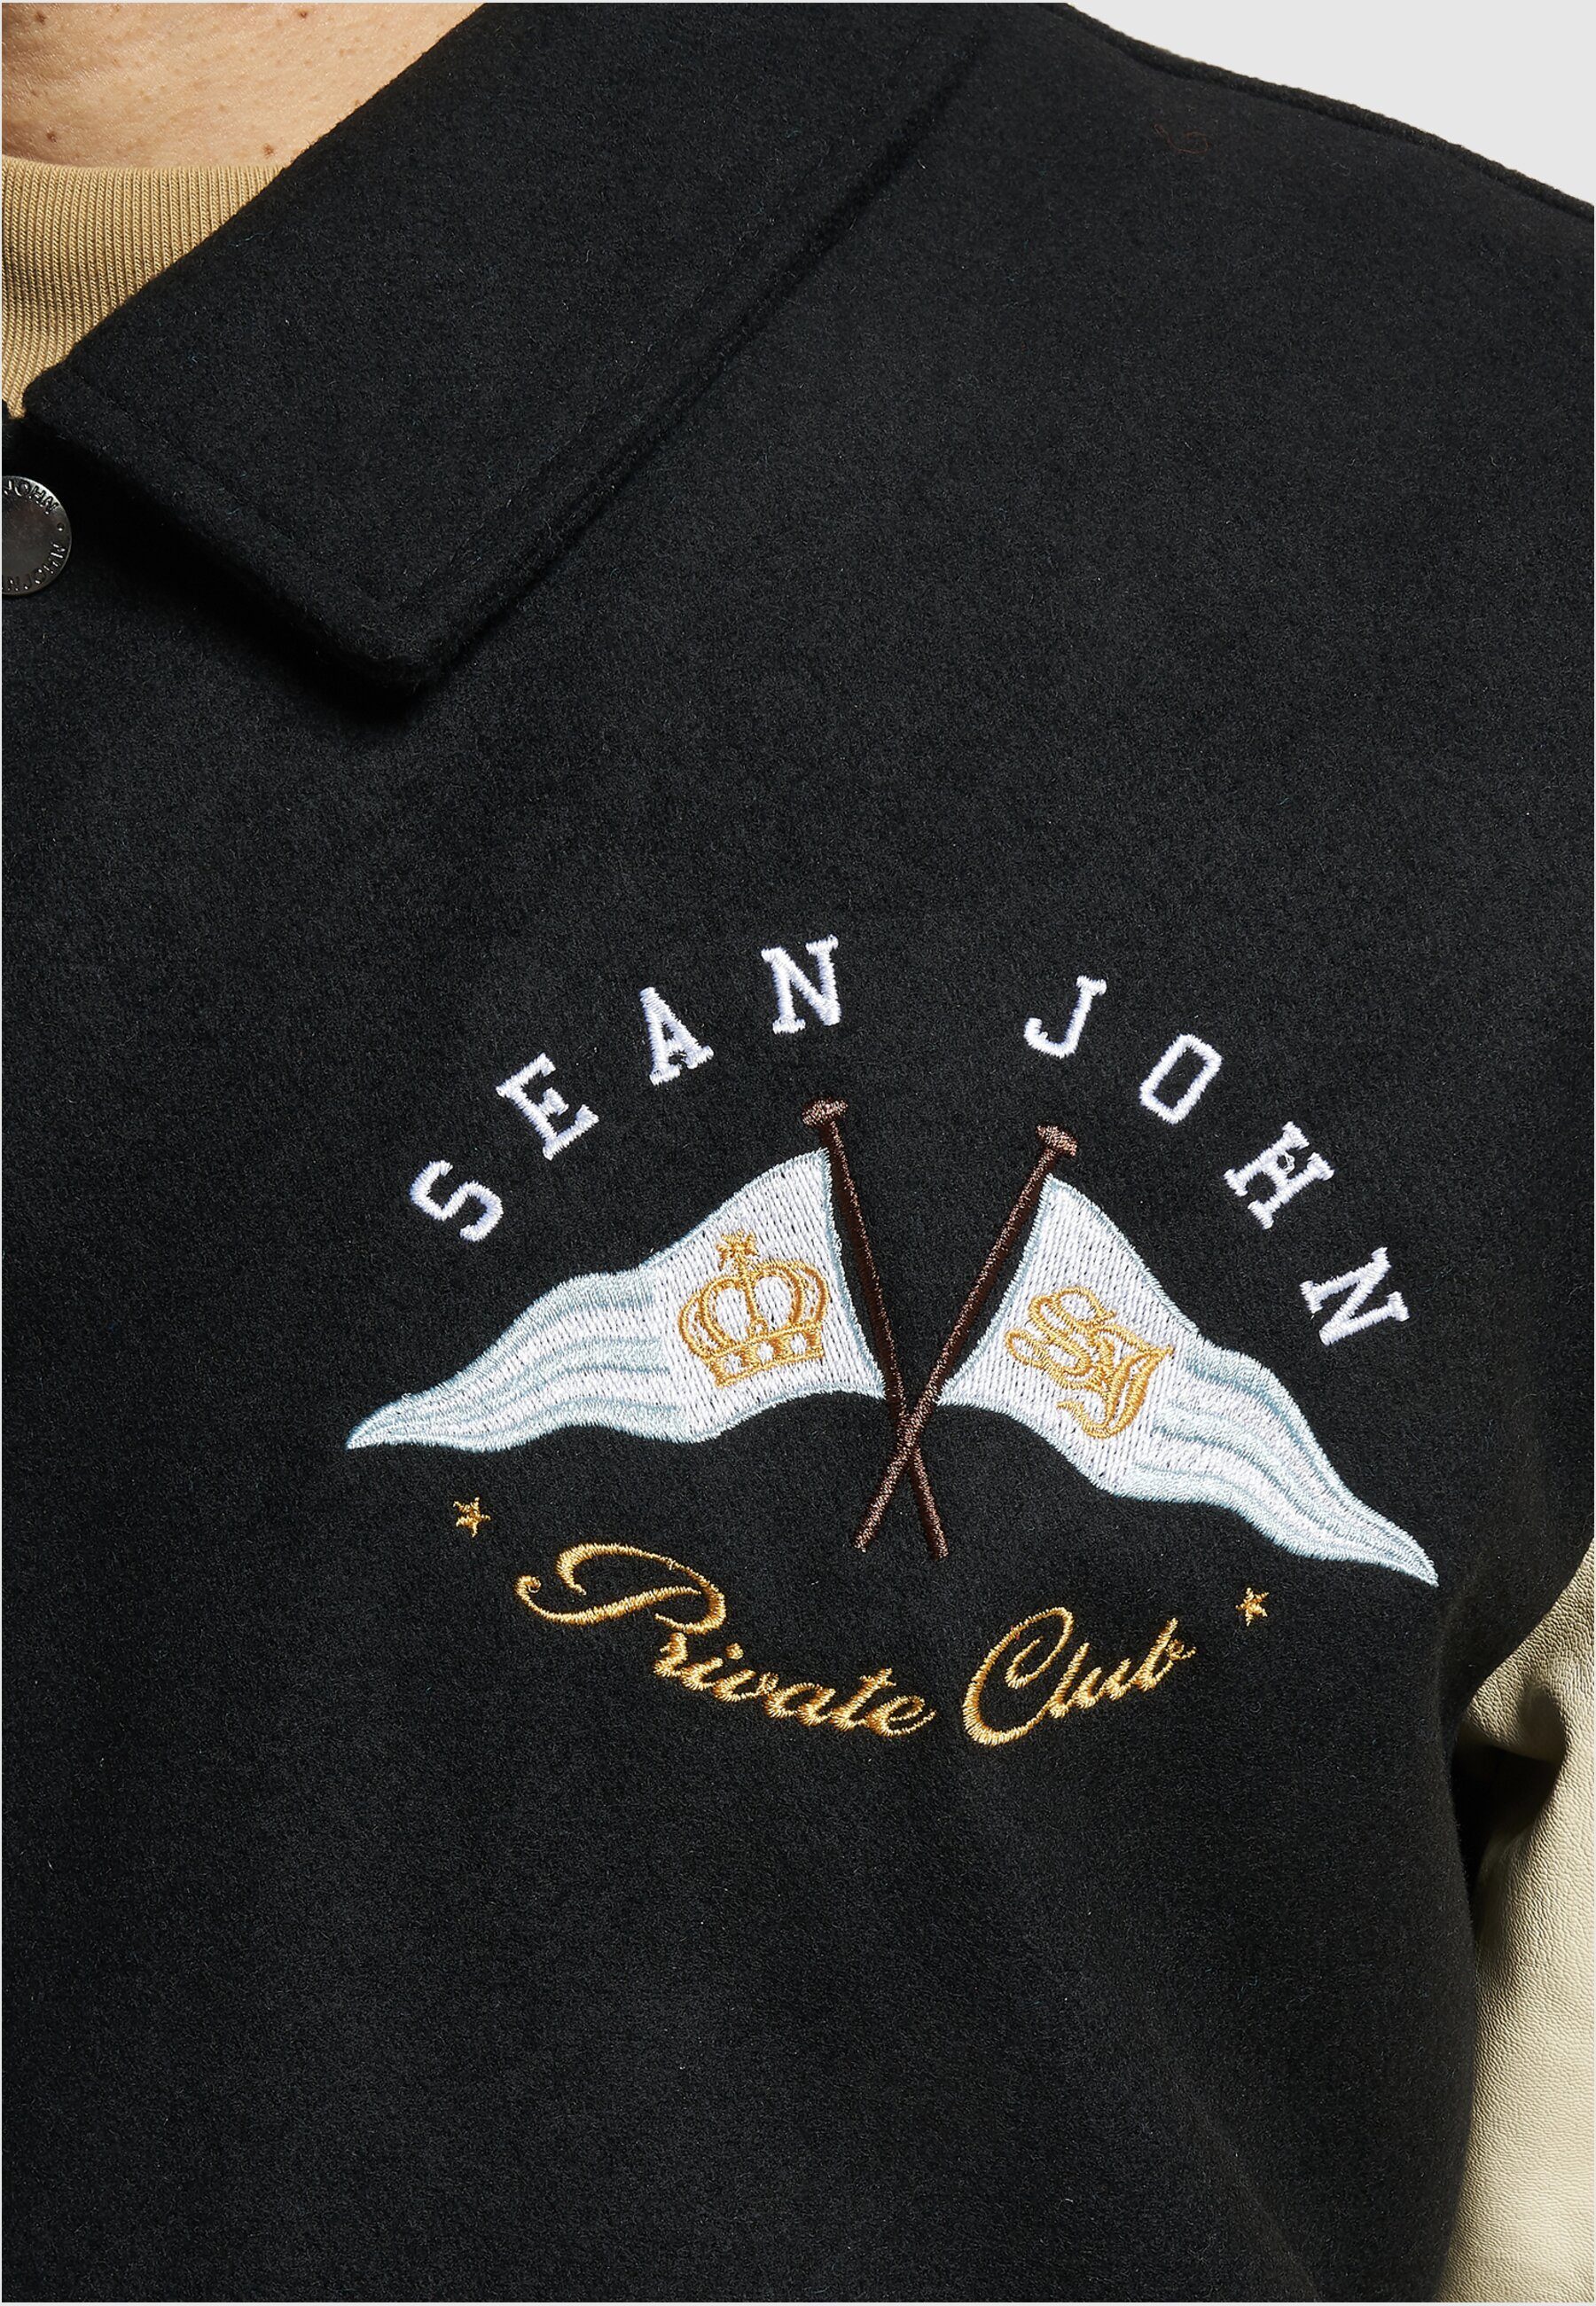 Sean John Outdoorjacke Herren JM232-016-02 Club SJ Yacht Collegejacket (1-St)